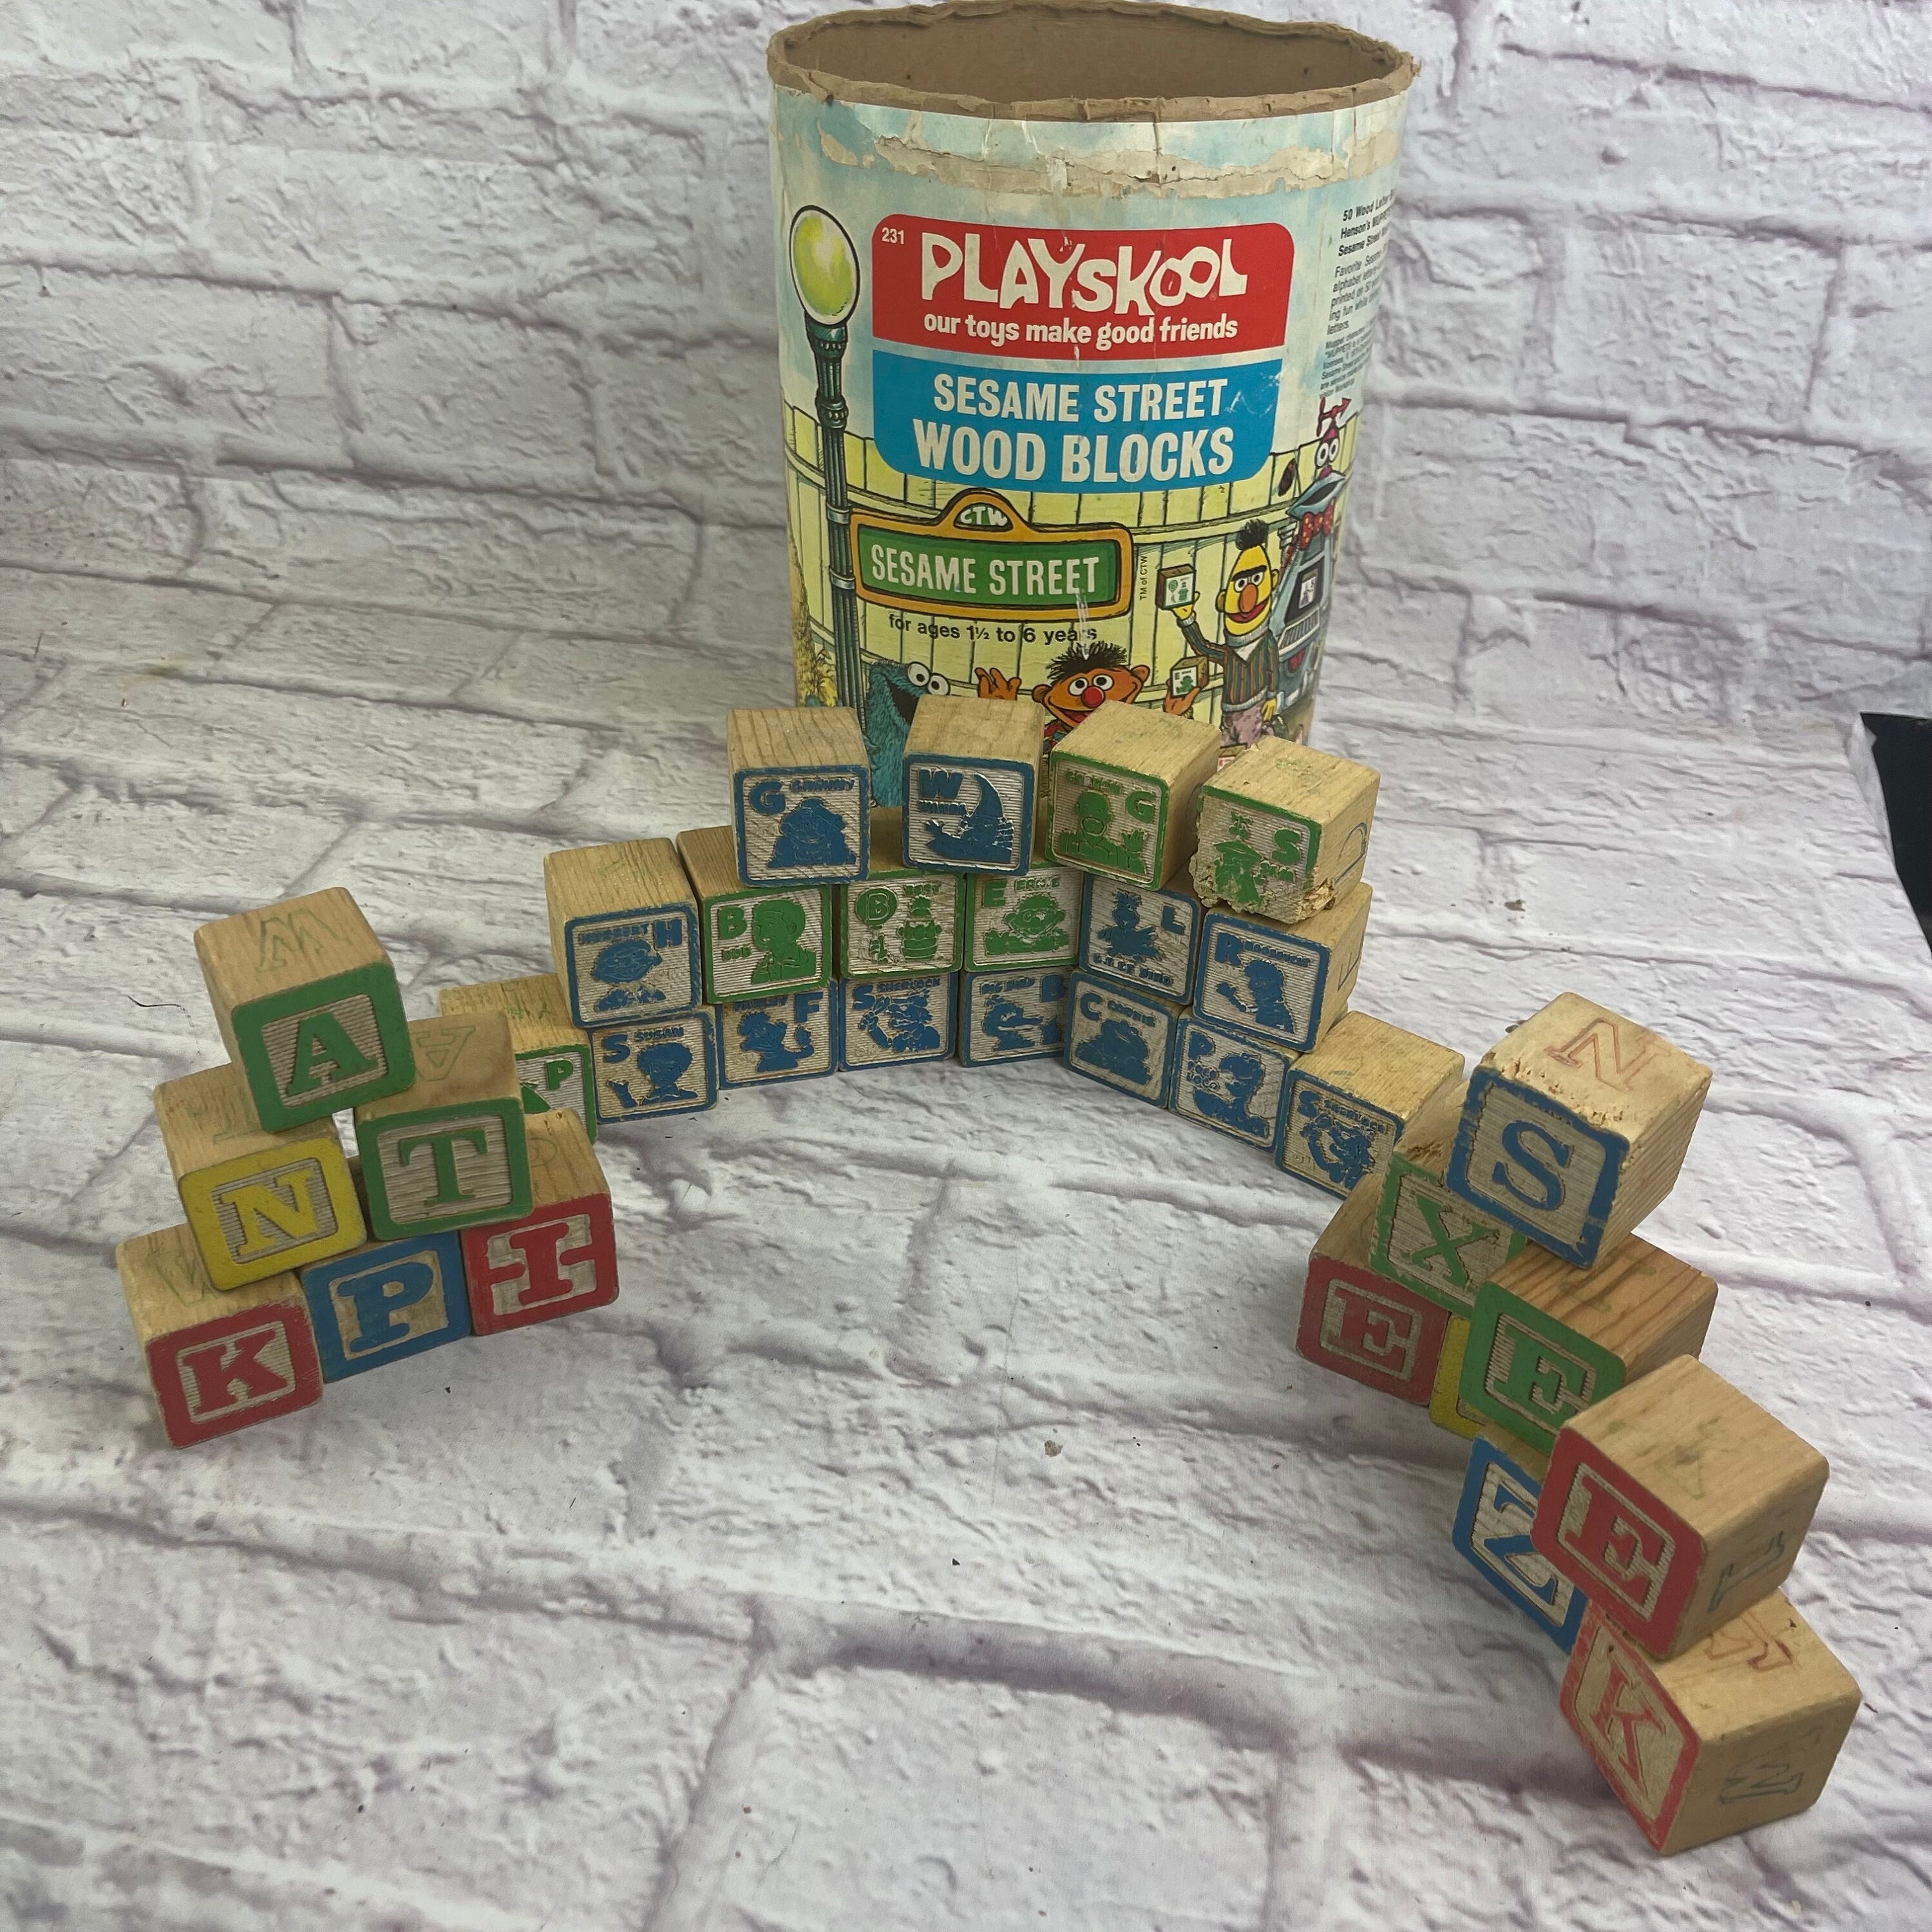 Baby Shower Gift Baby Blocks Wooden Blocks Personalized Blocks